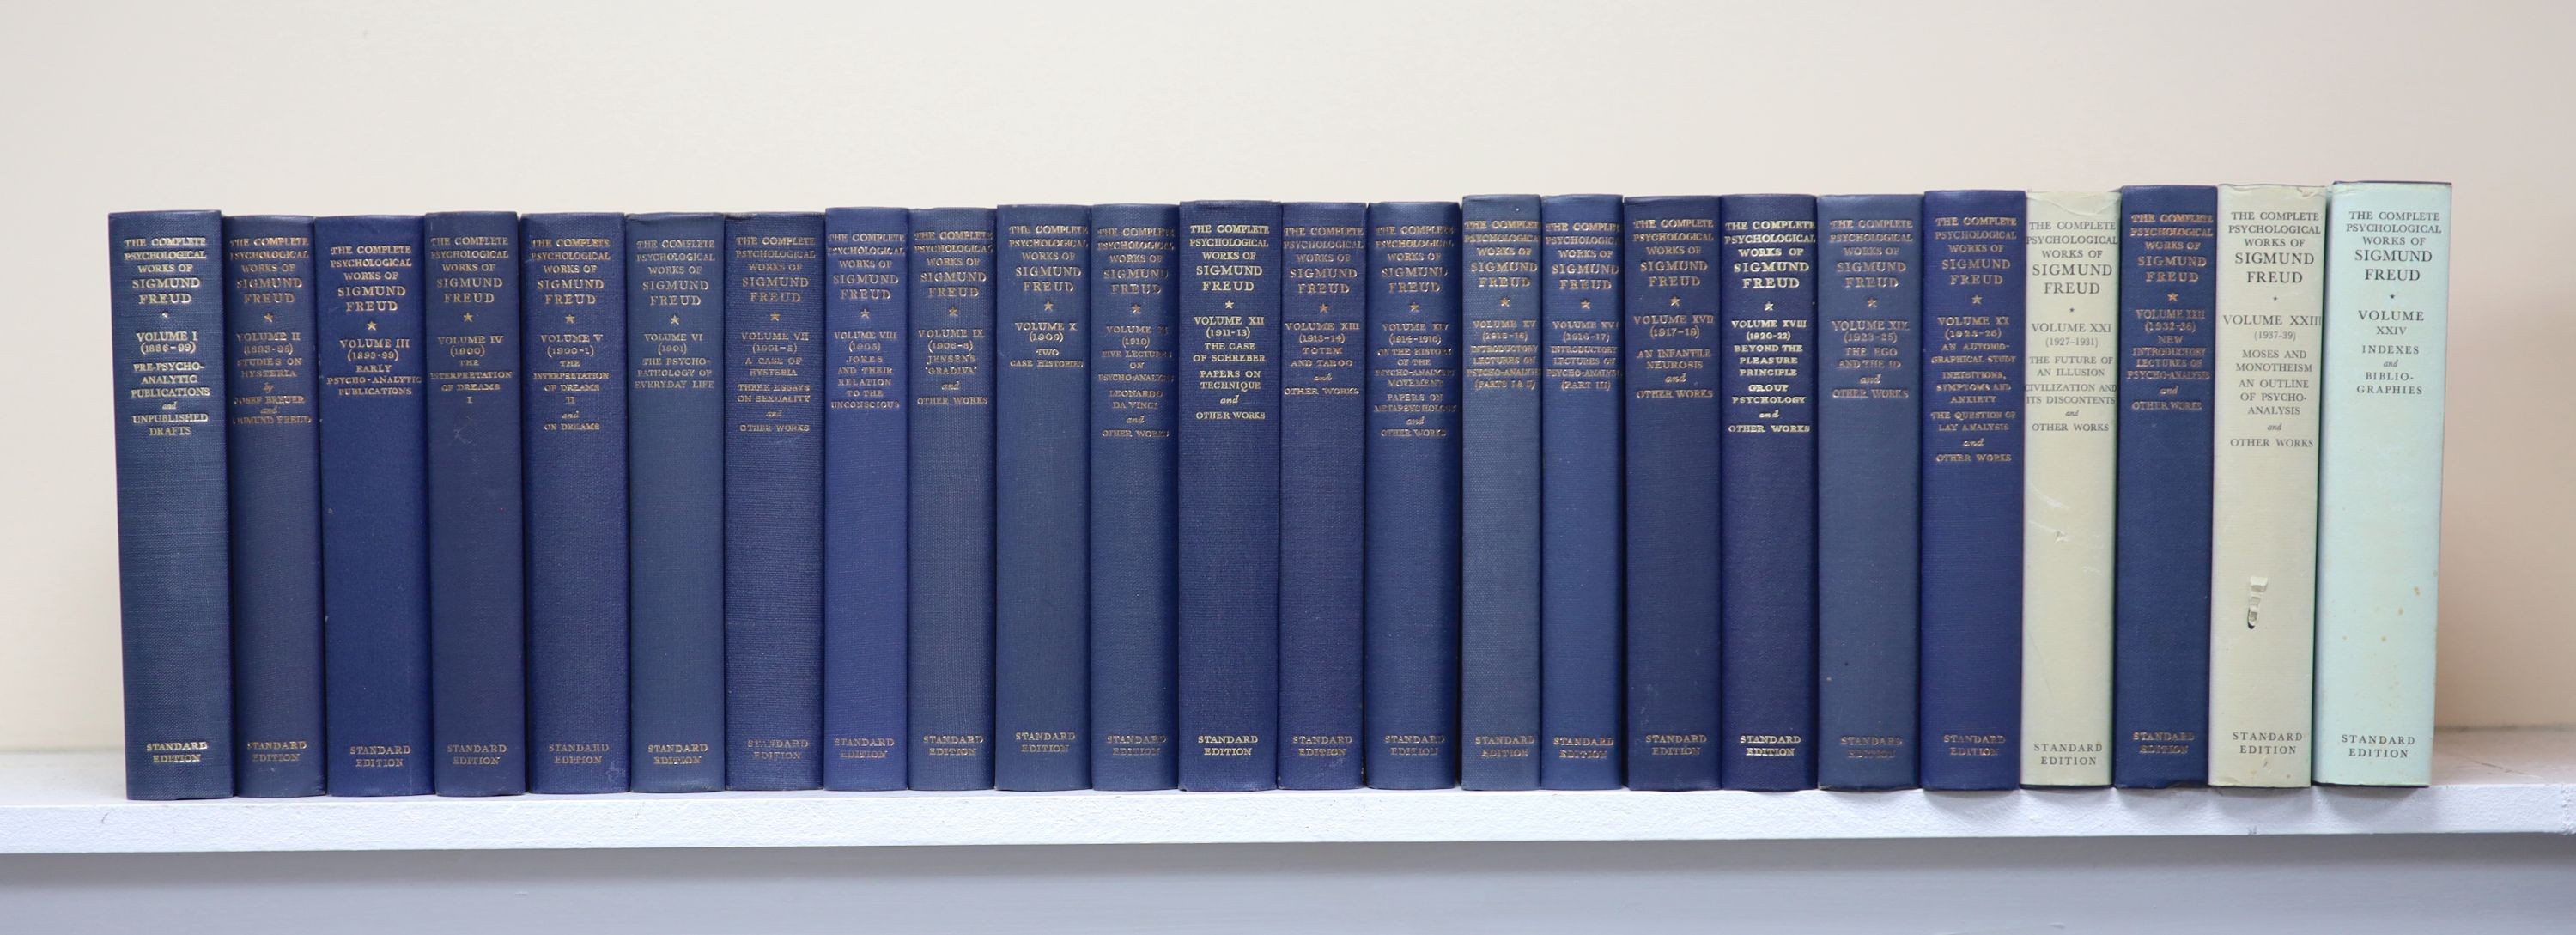 Freud, Sigmund - The Complete Psychological Works of Sigmund Freud, 24 vols, 8vo, blue cloth, vols, 21, 23 and 24 with d/j’s, The Hogarth Press, London, 1961-74